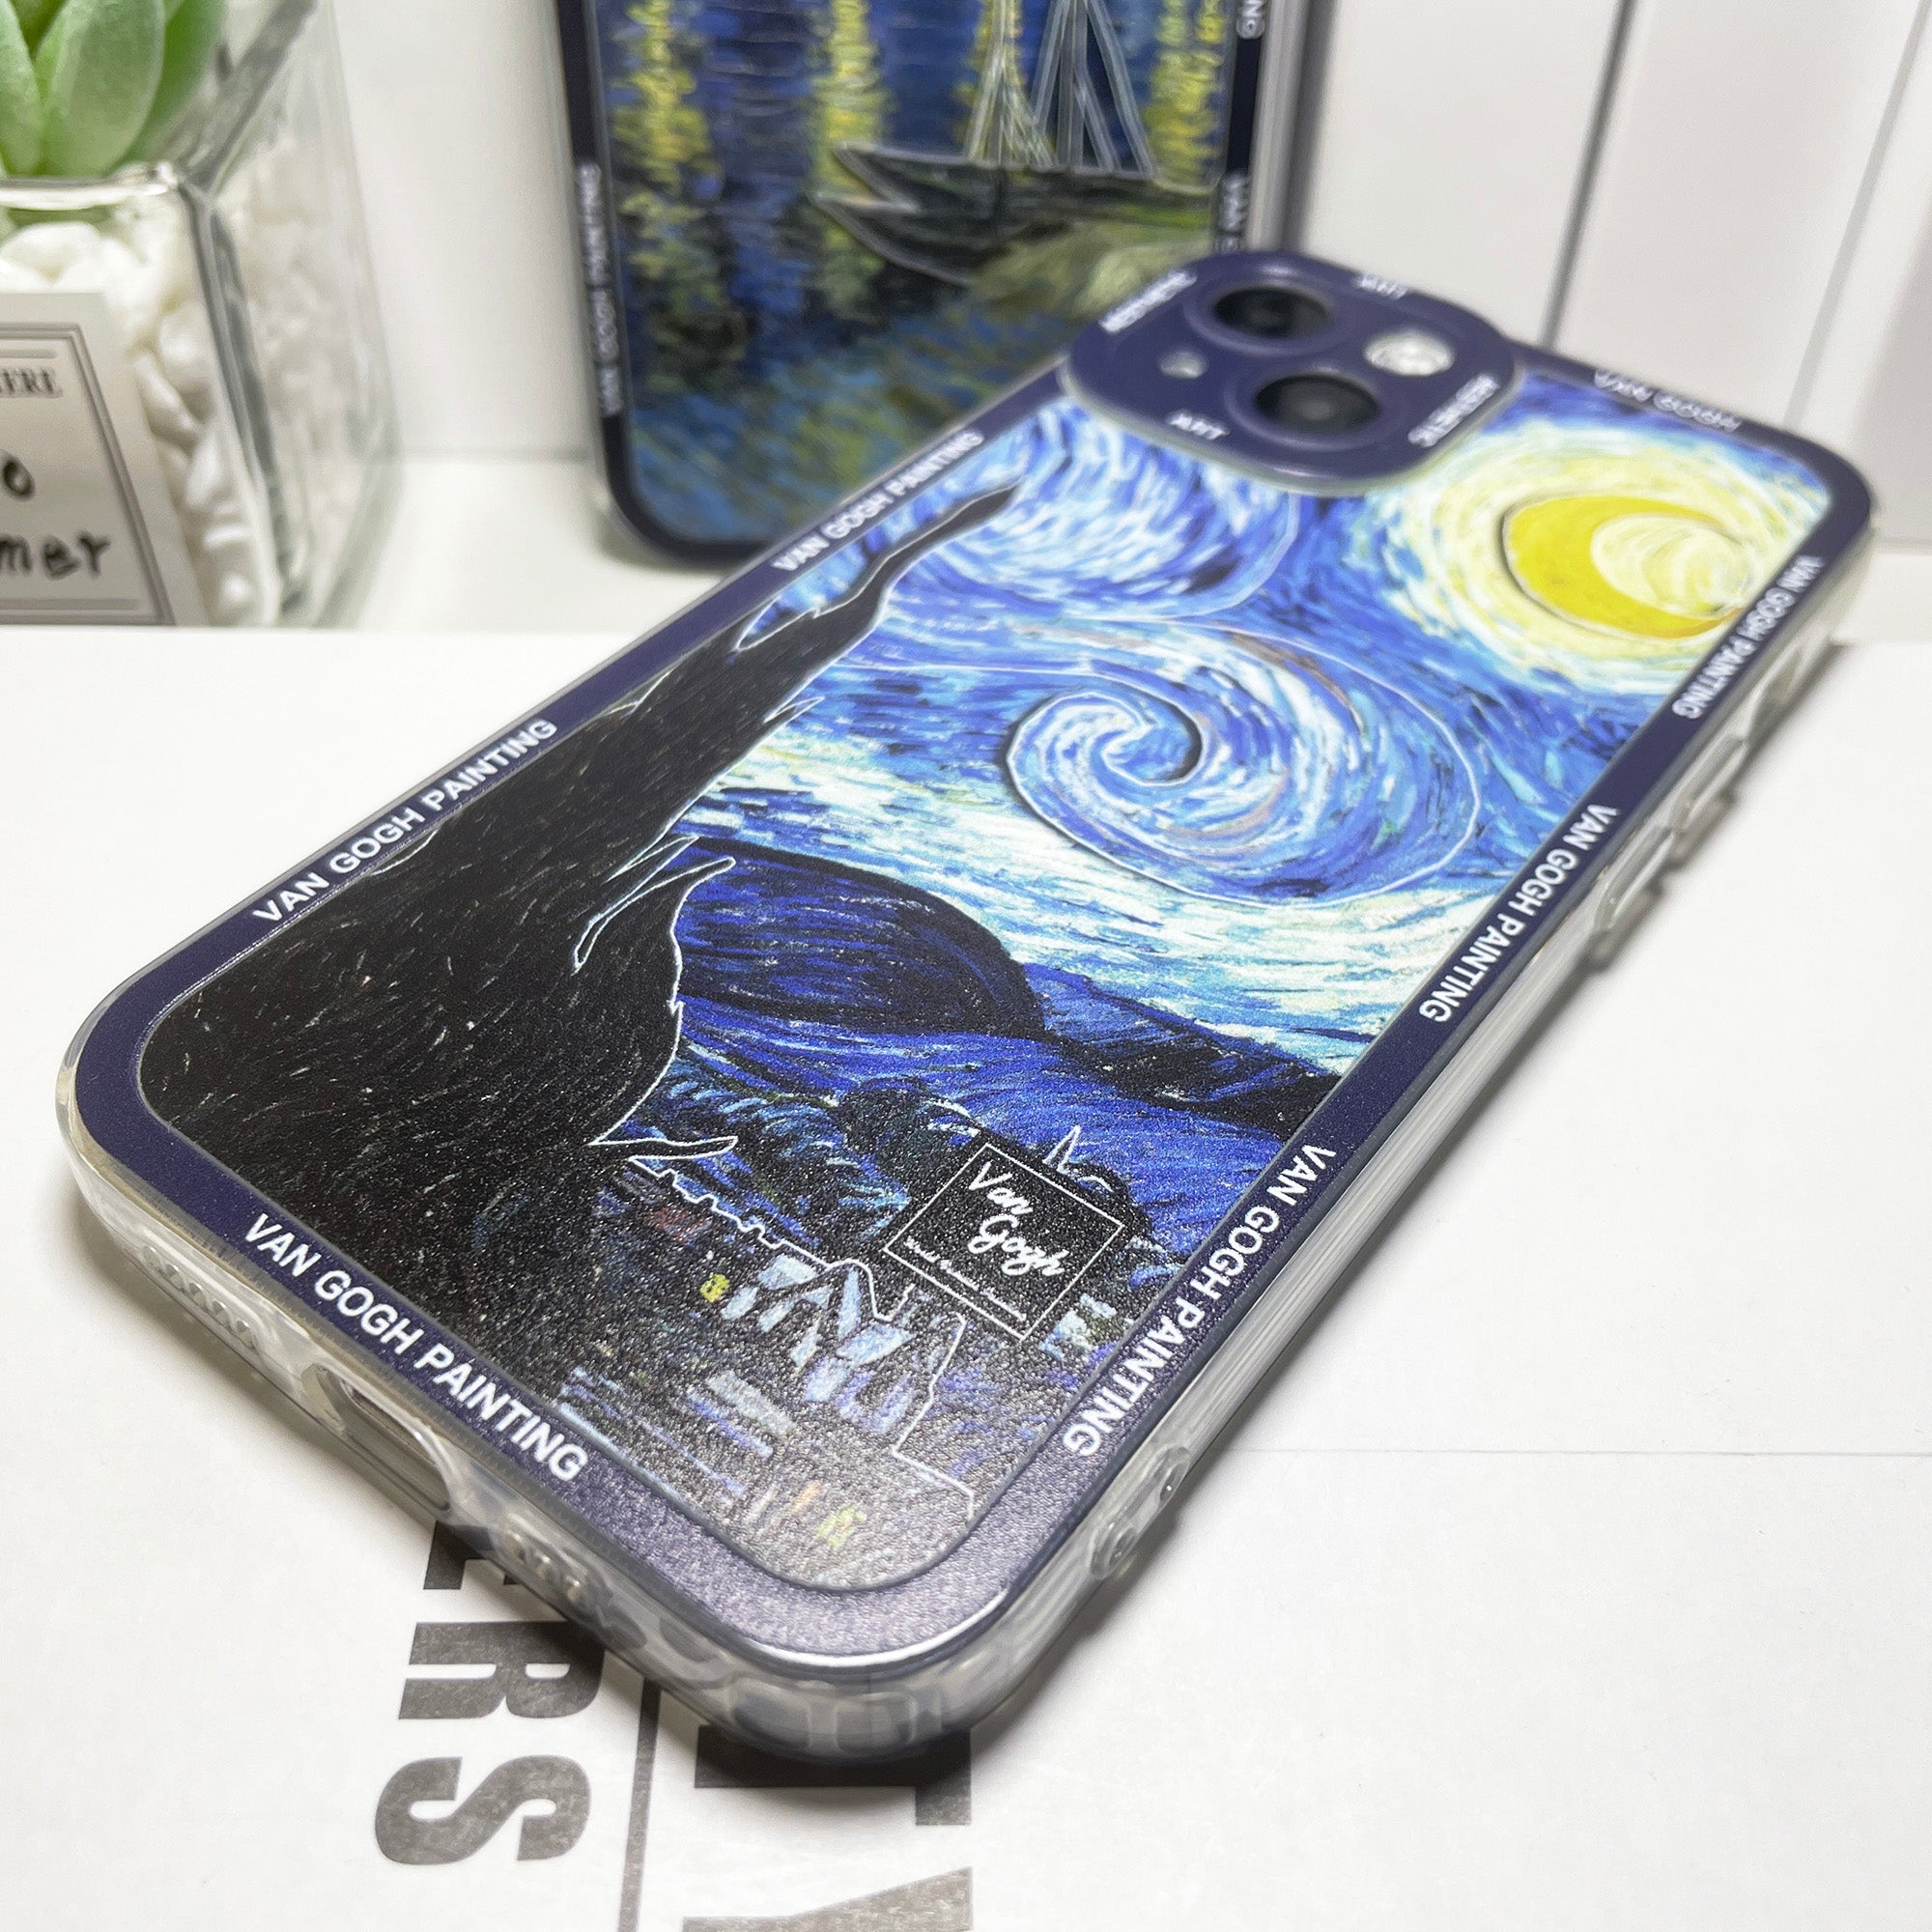 Van Gogh Art Aesthetic Silicone iPhone Case